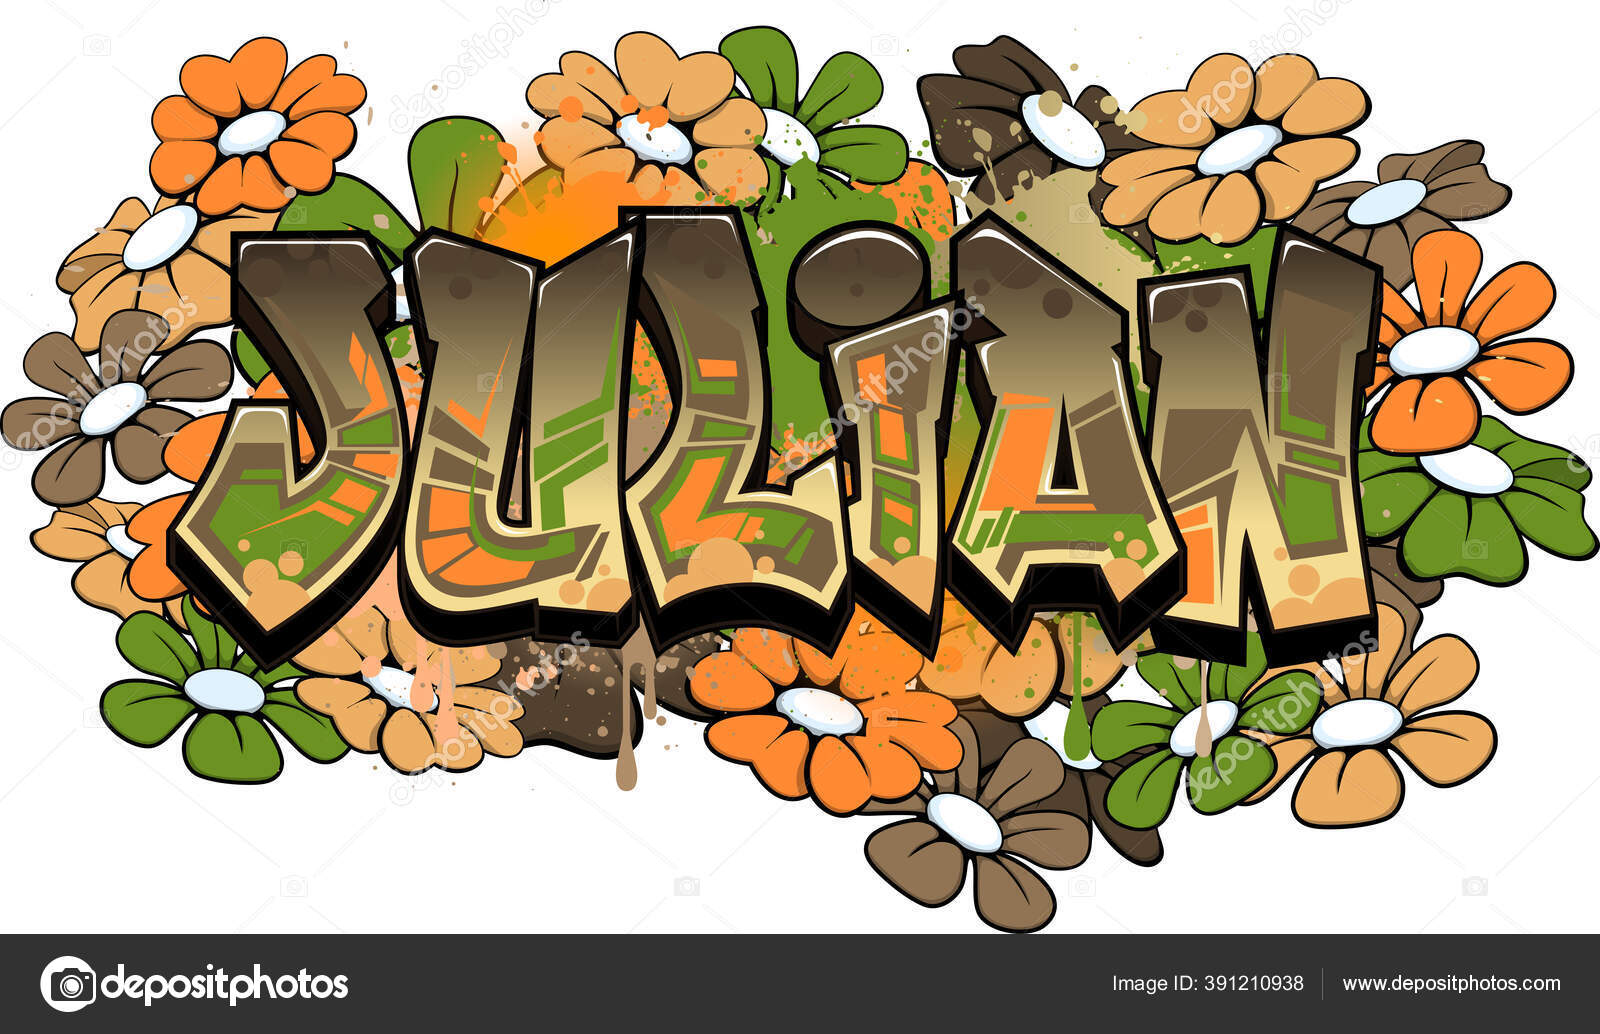 Julian Cool Graffiti Styled Logotype Design Legible Letters Aimed Wide Stock Vector C Mindgem